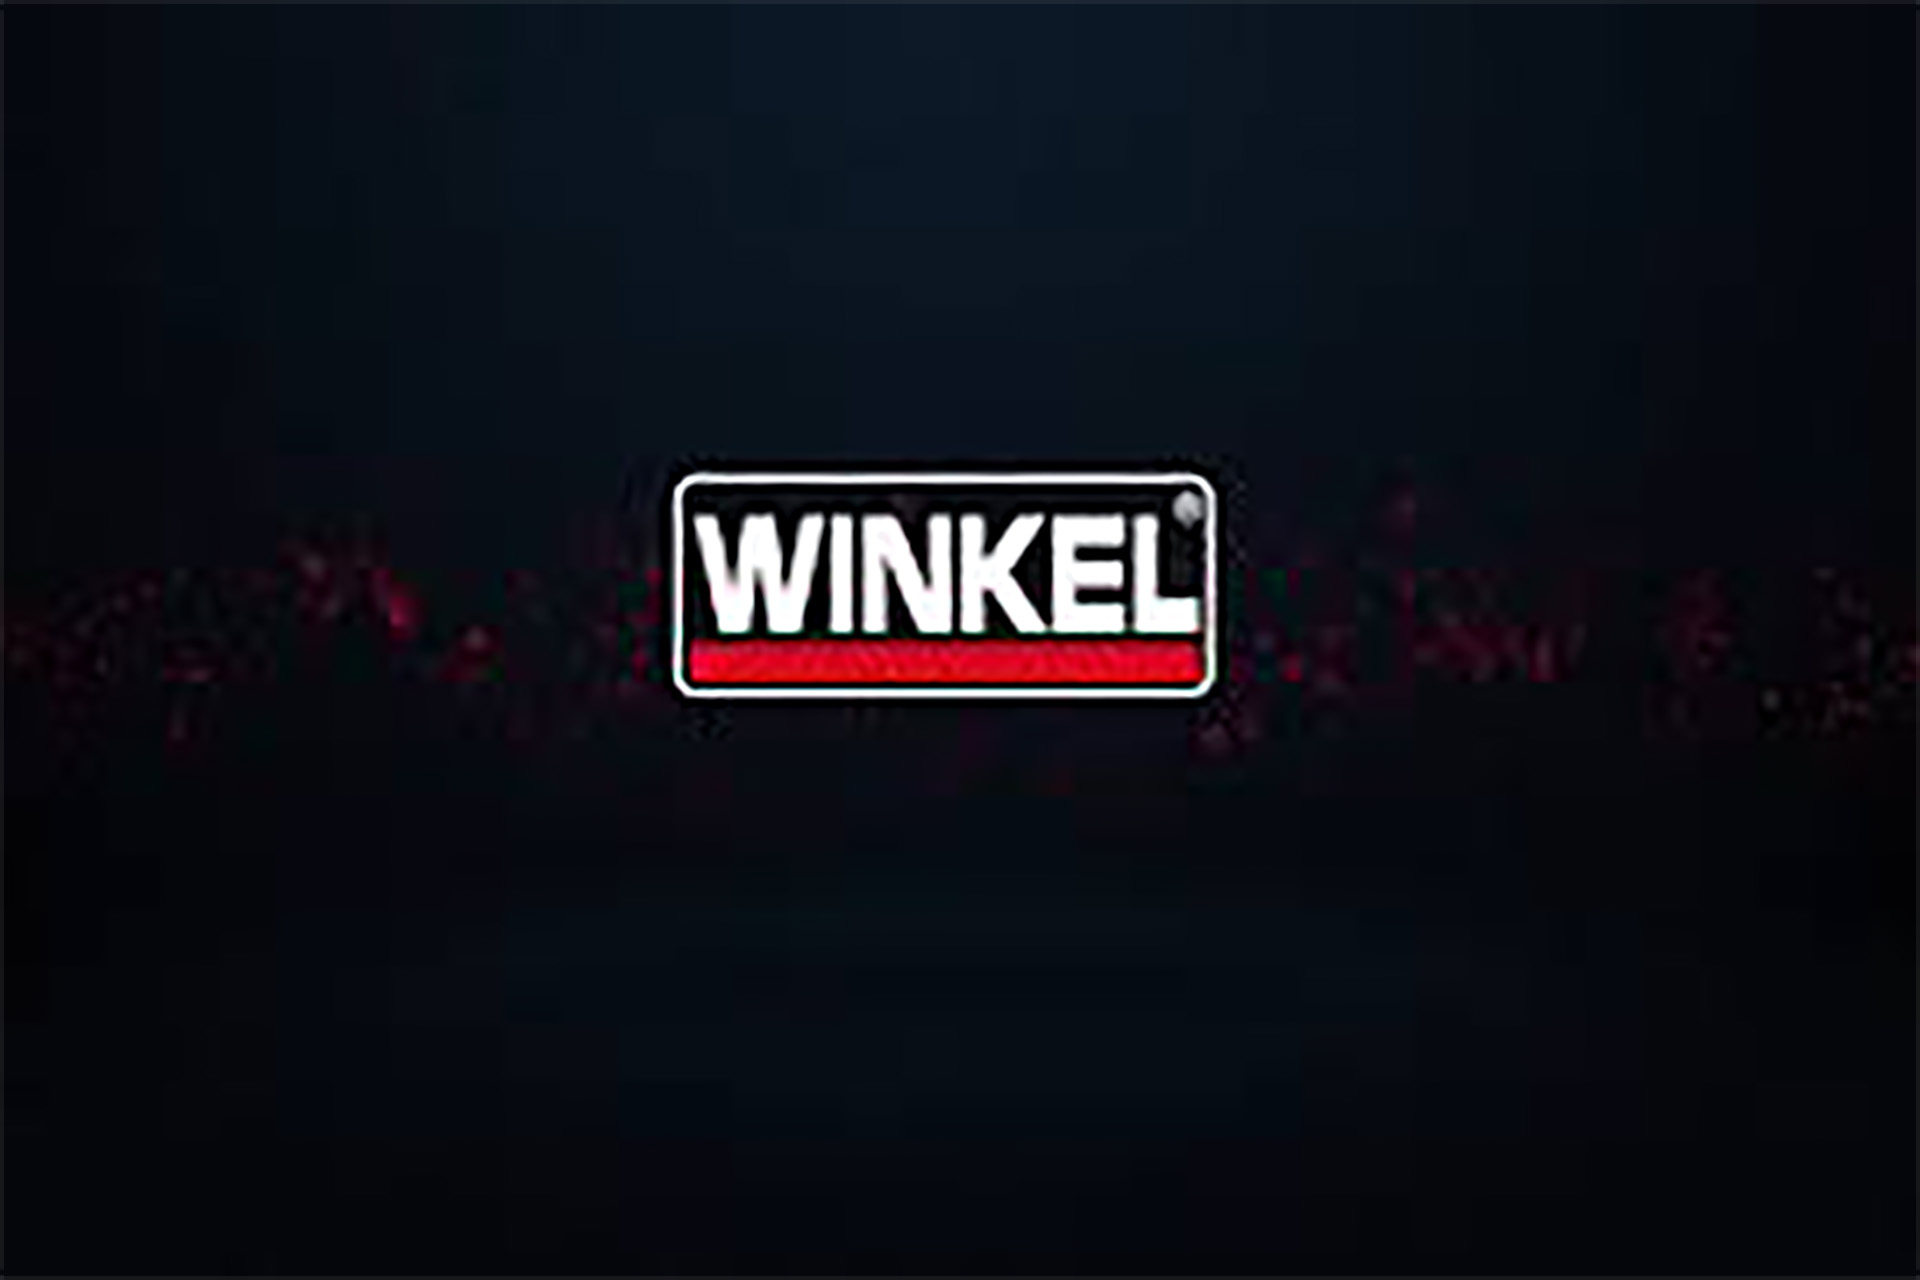 WINKEL